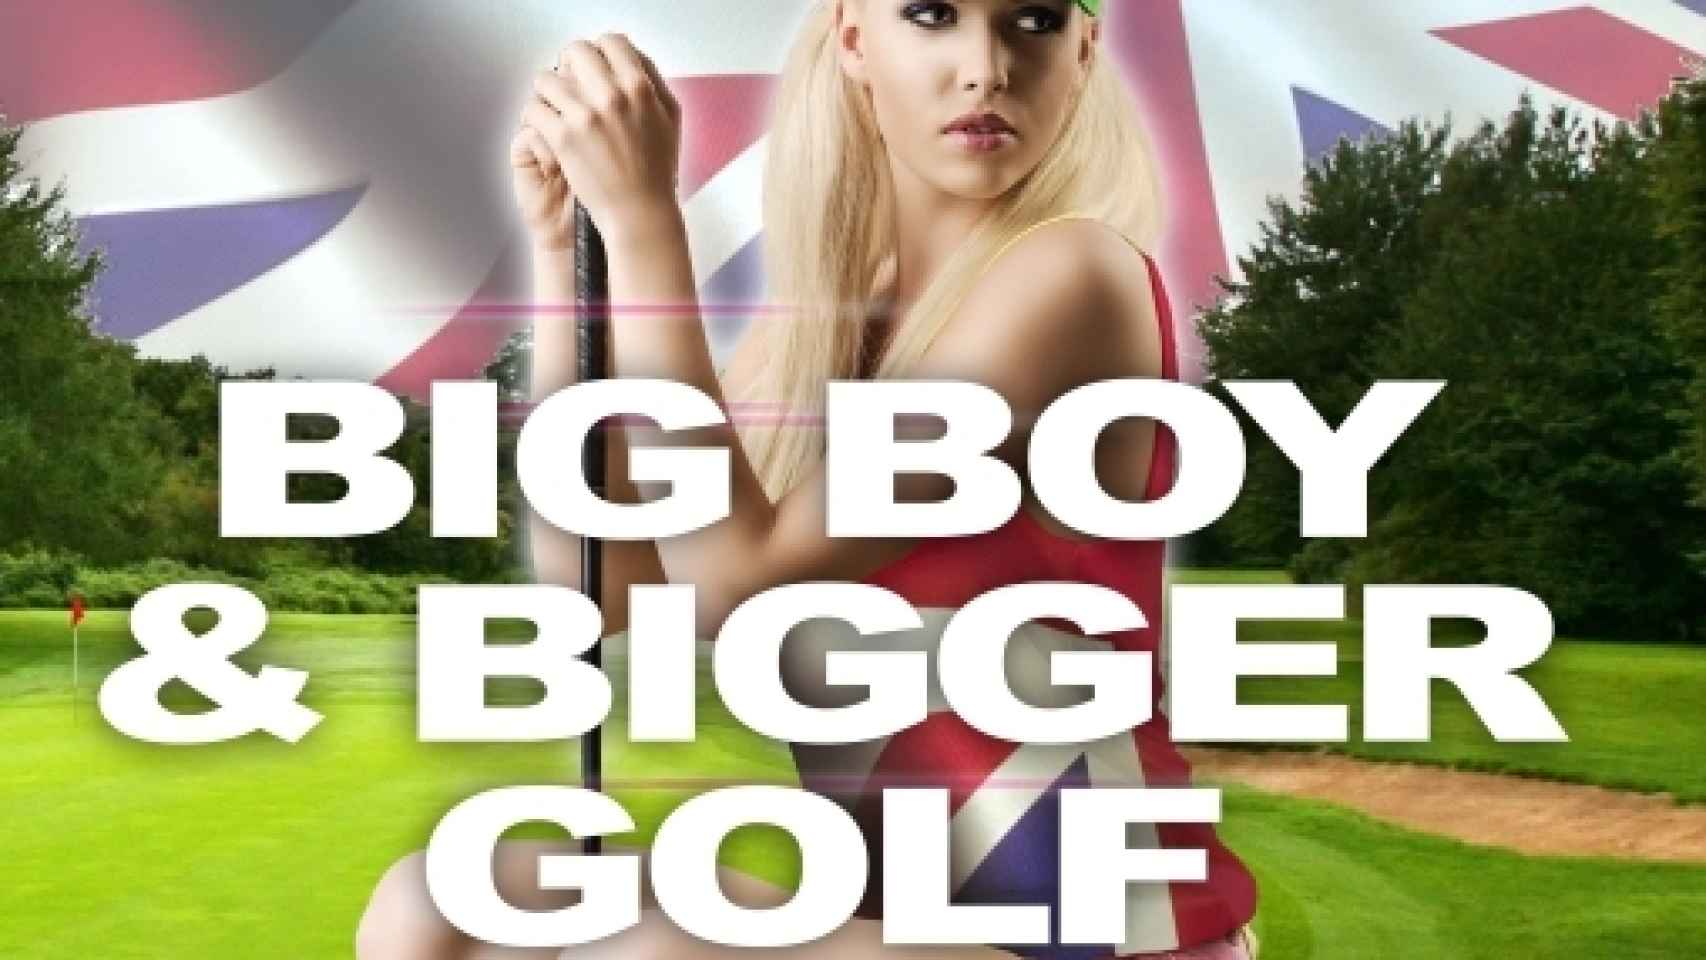 Cartel promocionando torneo sexista de golf. Foto: 4playproductions.com